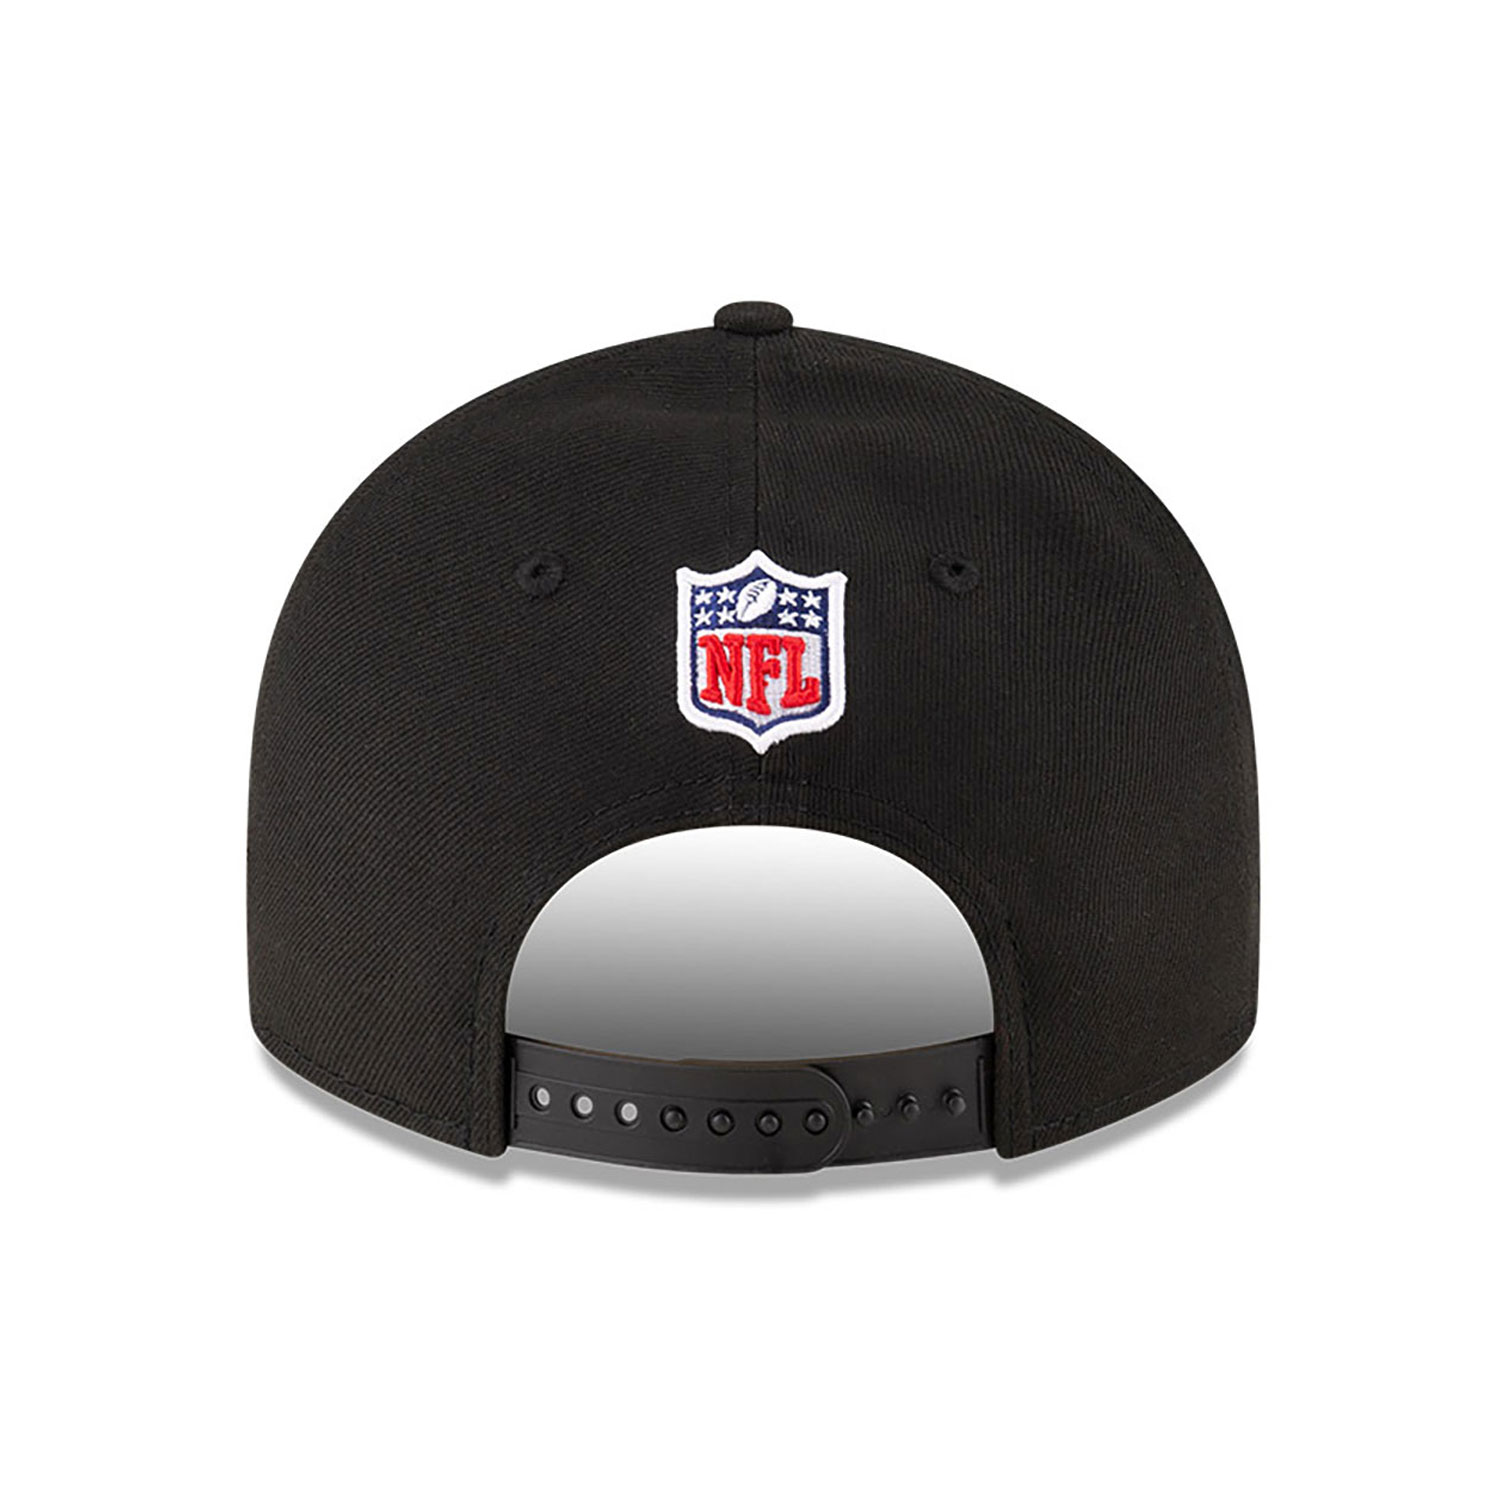 San Francisco 49ers Super Bowl LVIII Conference Champions Black Low Profile 9FIFTY Snapback Cap